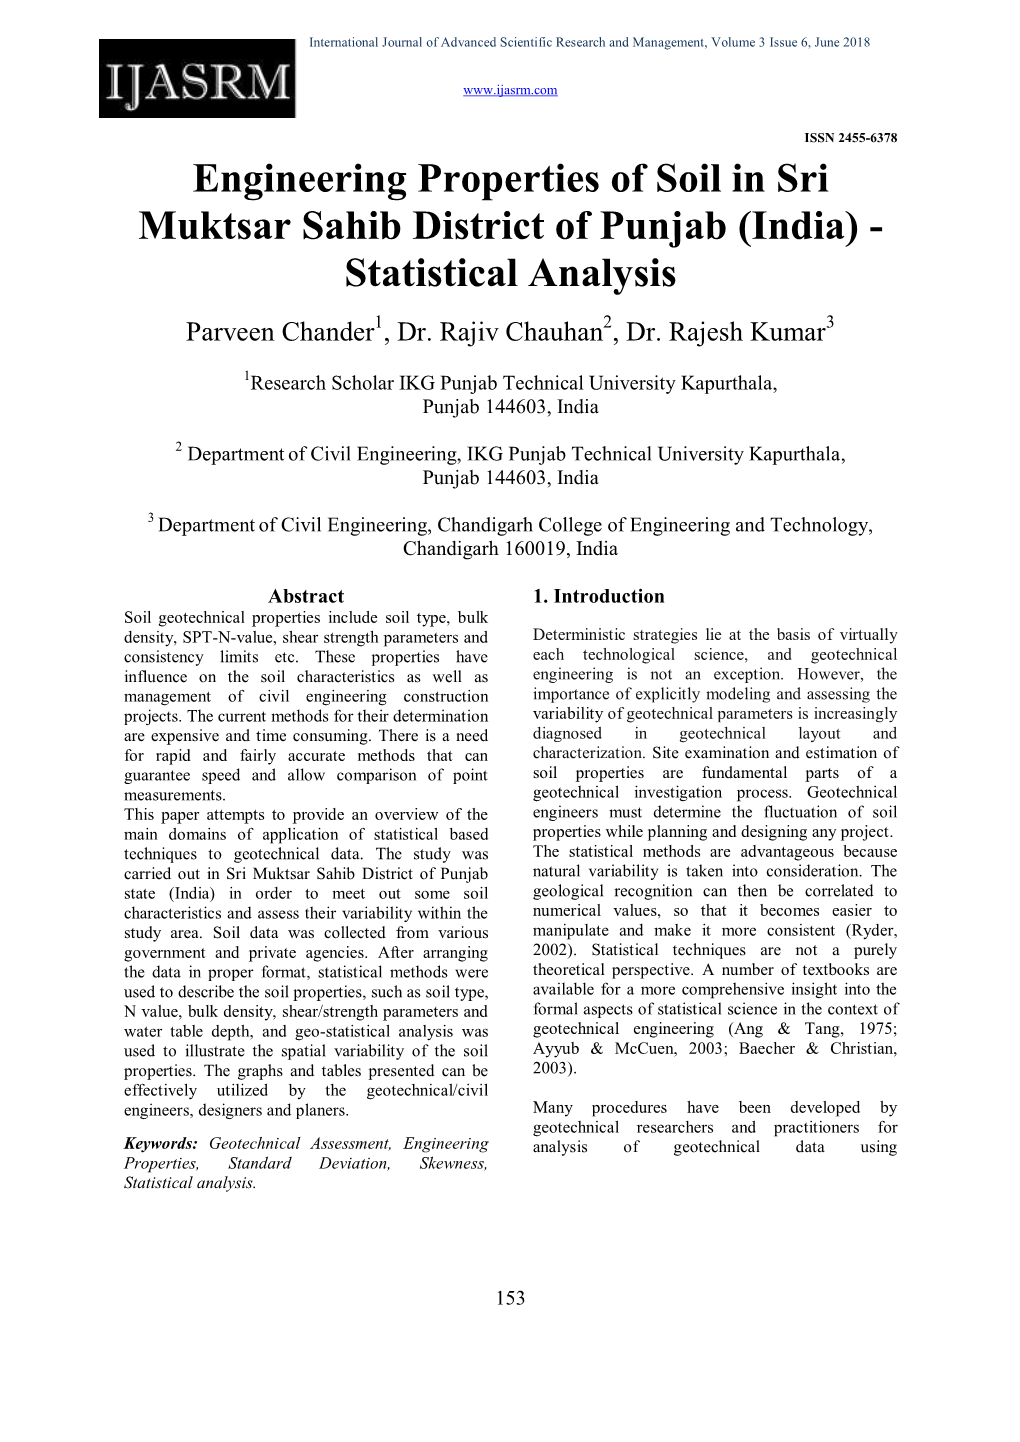 Engineering Properties of Soil in Sri Muktsar Sahib District of Punjab (India) - Statistical Analysis Parveen Chander1, Dr